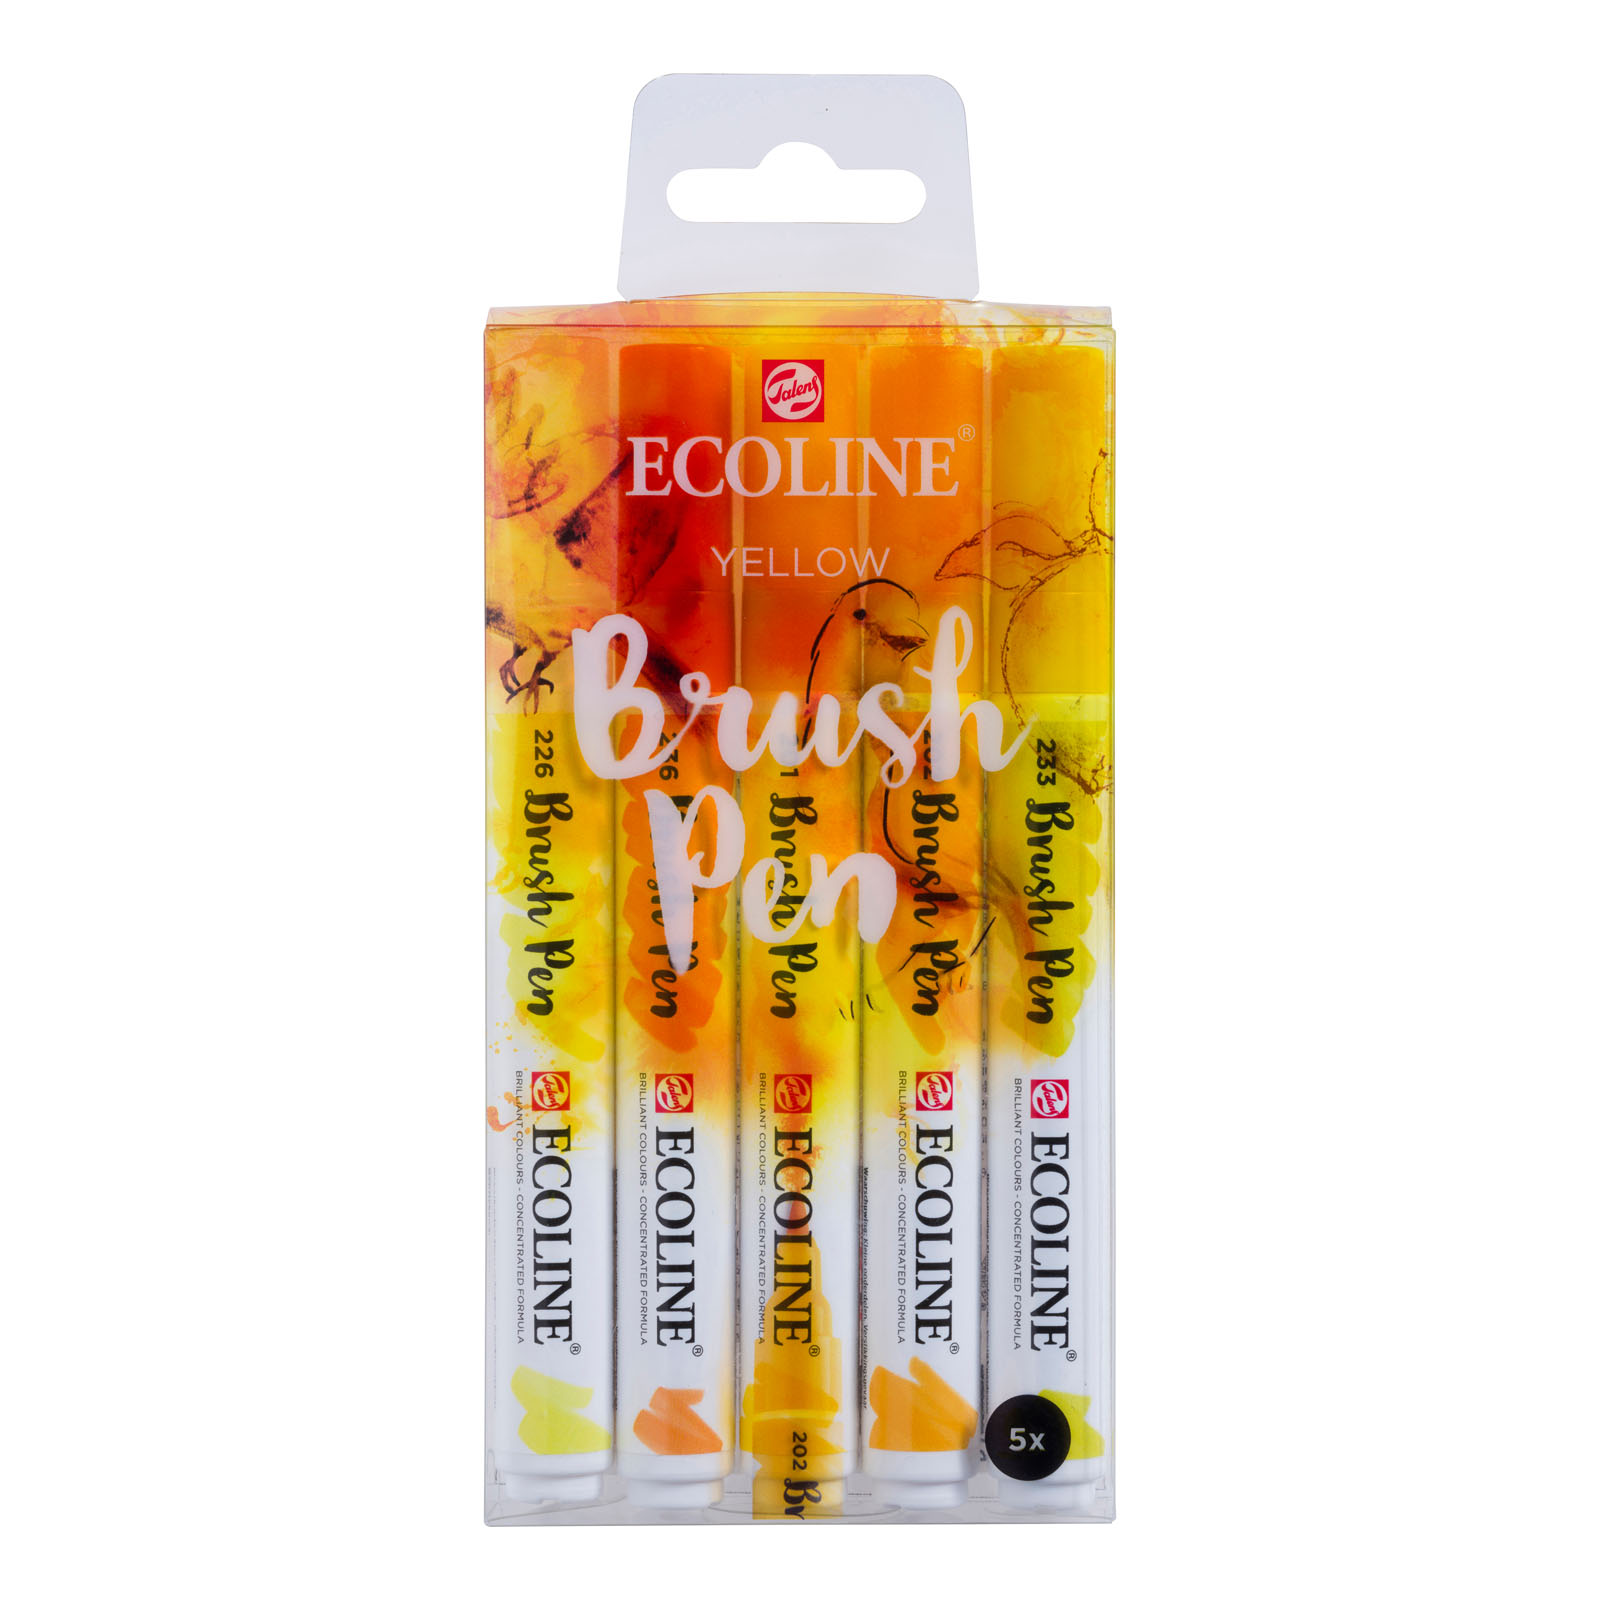 Ecoline • Brush Pens Set of 5 Yellow